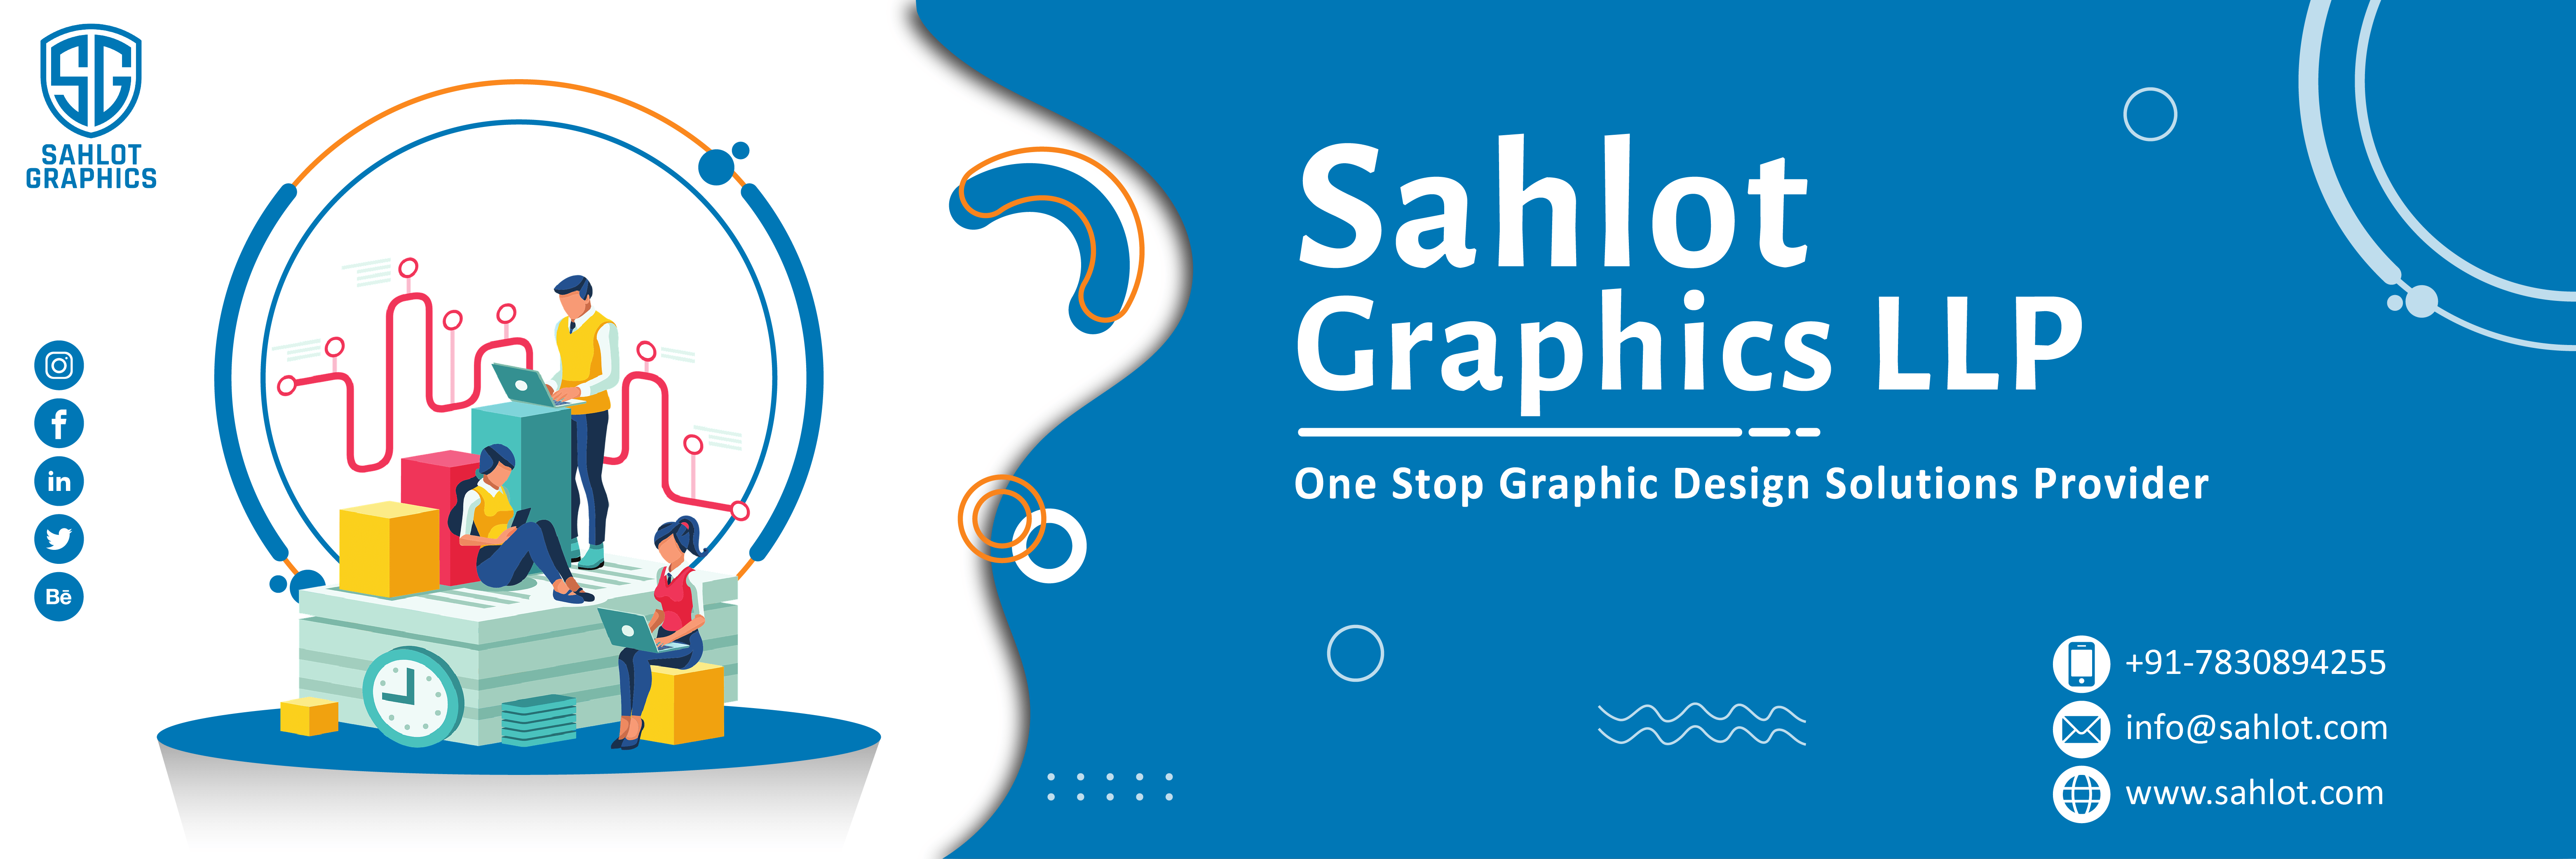 sahlot graphics llp banner image